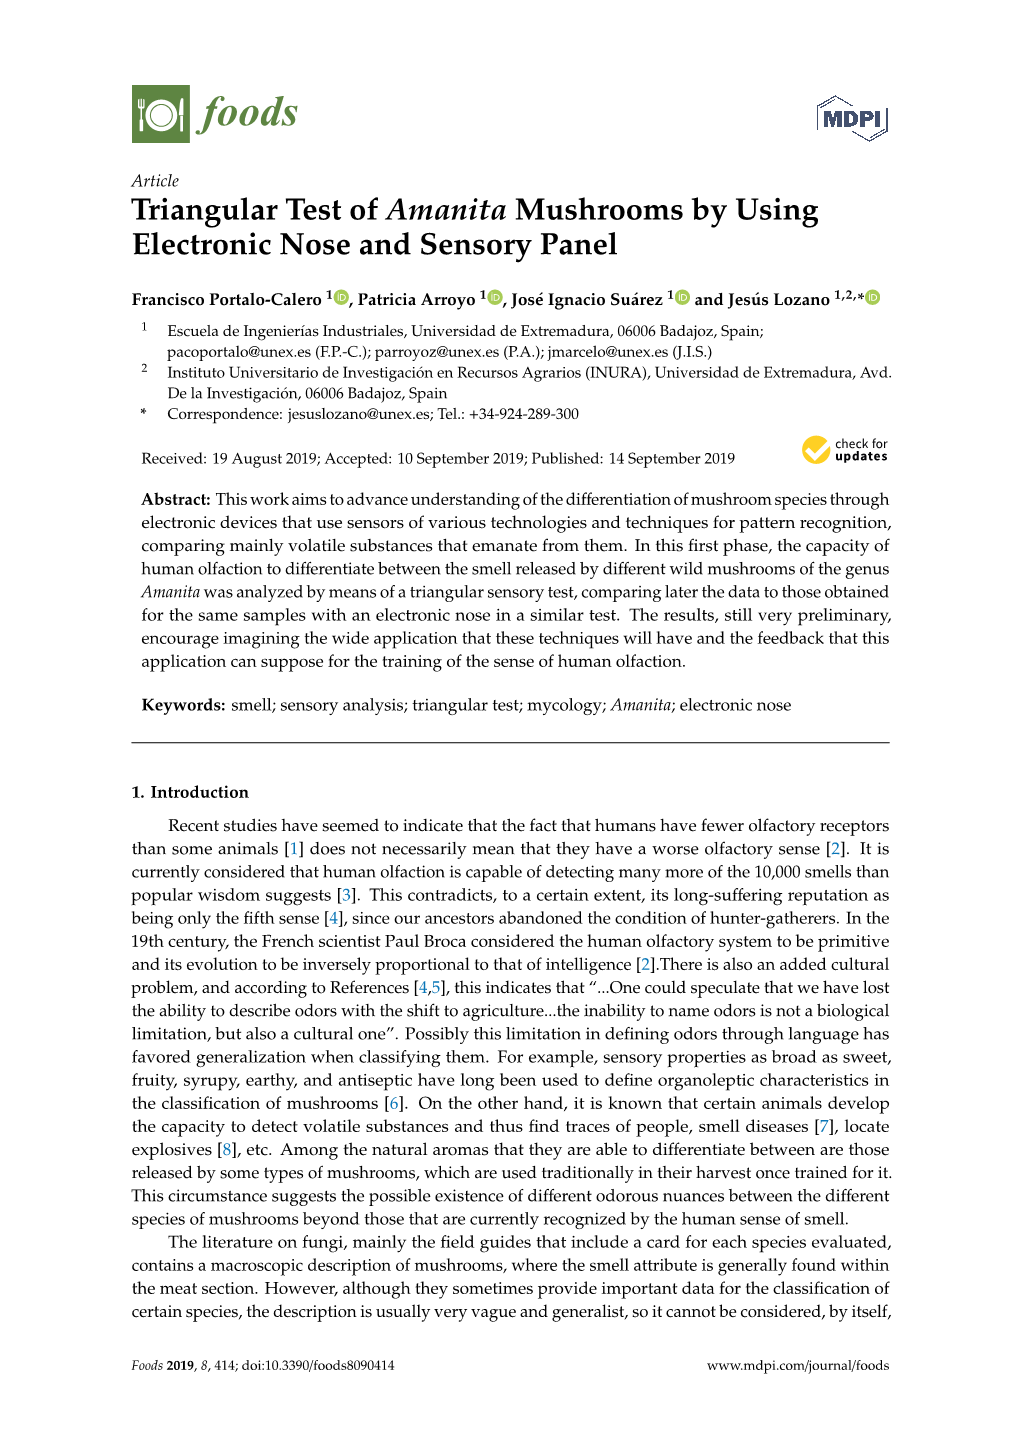 Triangular Test of Amanita Mushrooms by Using Electronic Nose and Sensory Panel